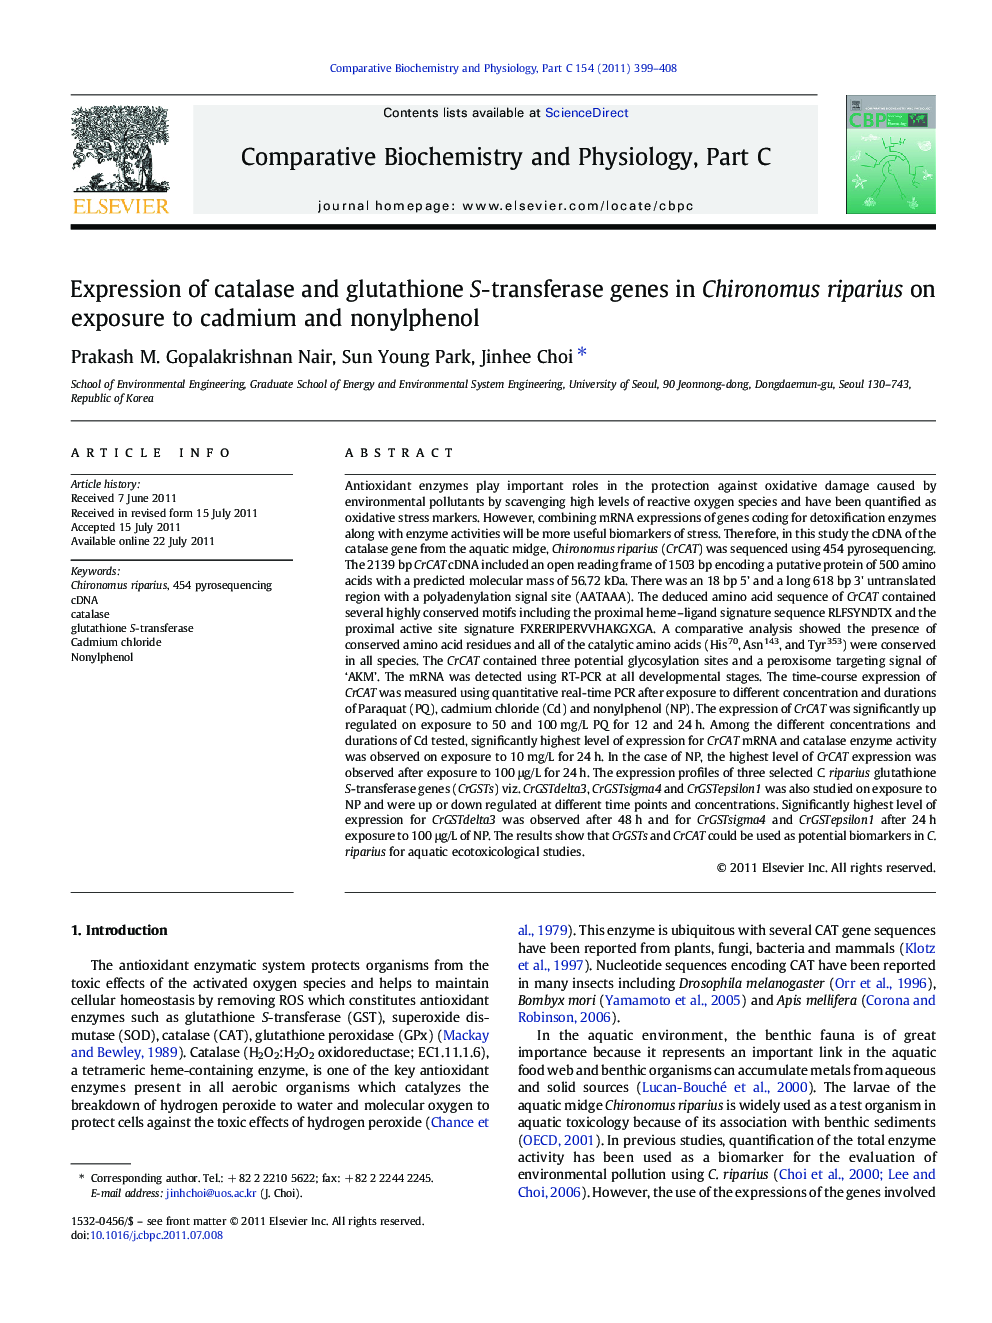 Expression of catalase and glutathione S-transferase genes in Chironomus riparius on exposure to cadmium and nonylphenol